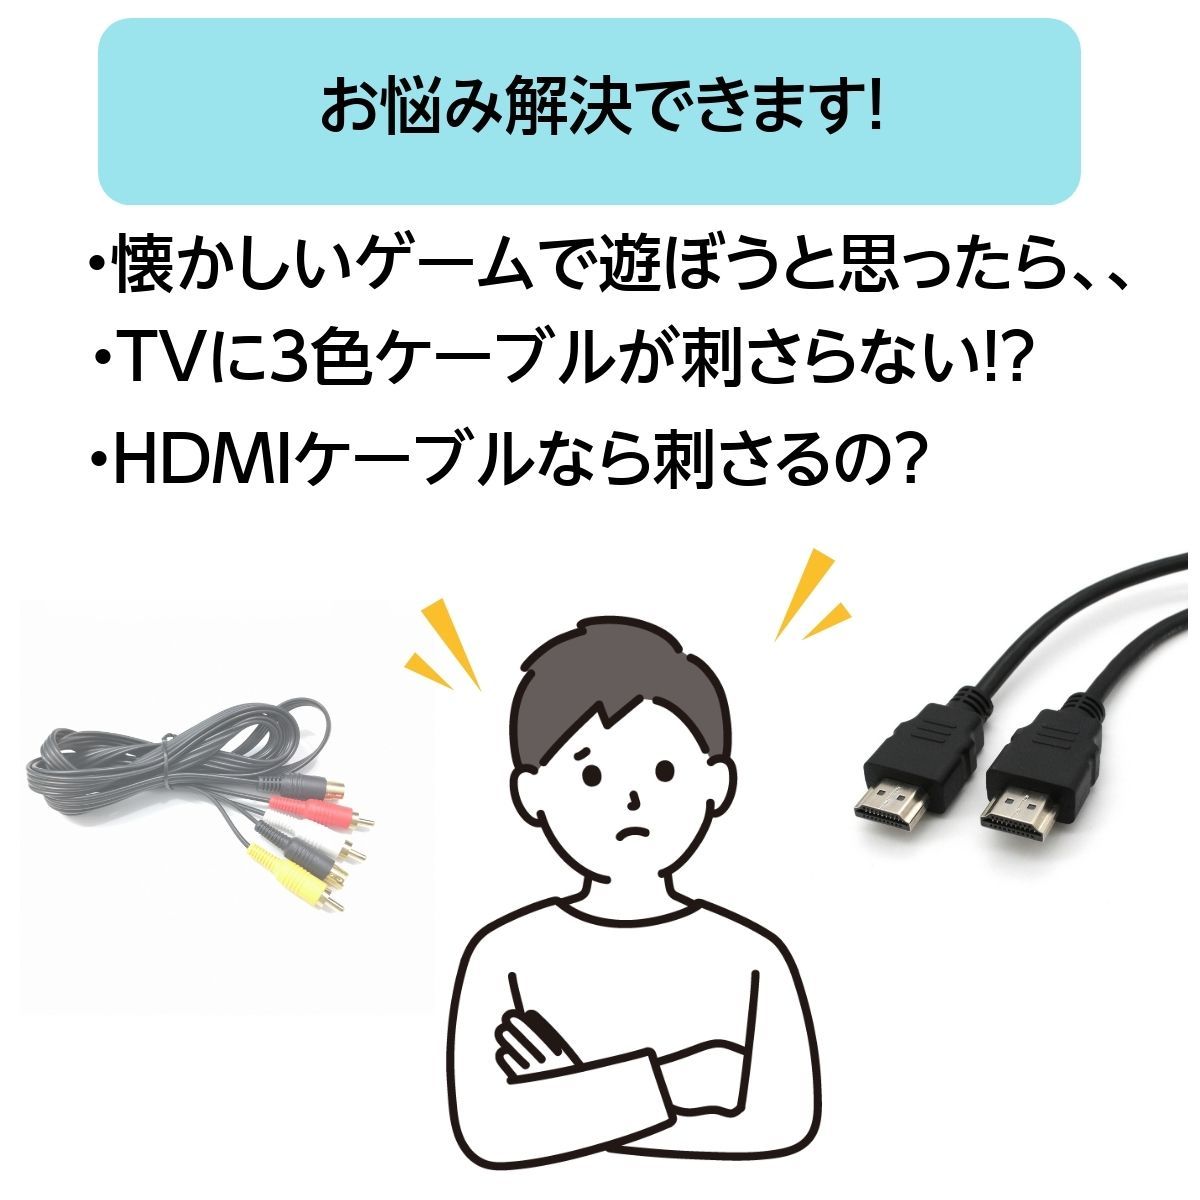 PS1 PS2 to HDMI 変換 変換ケーブル コンバーター プレステ2